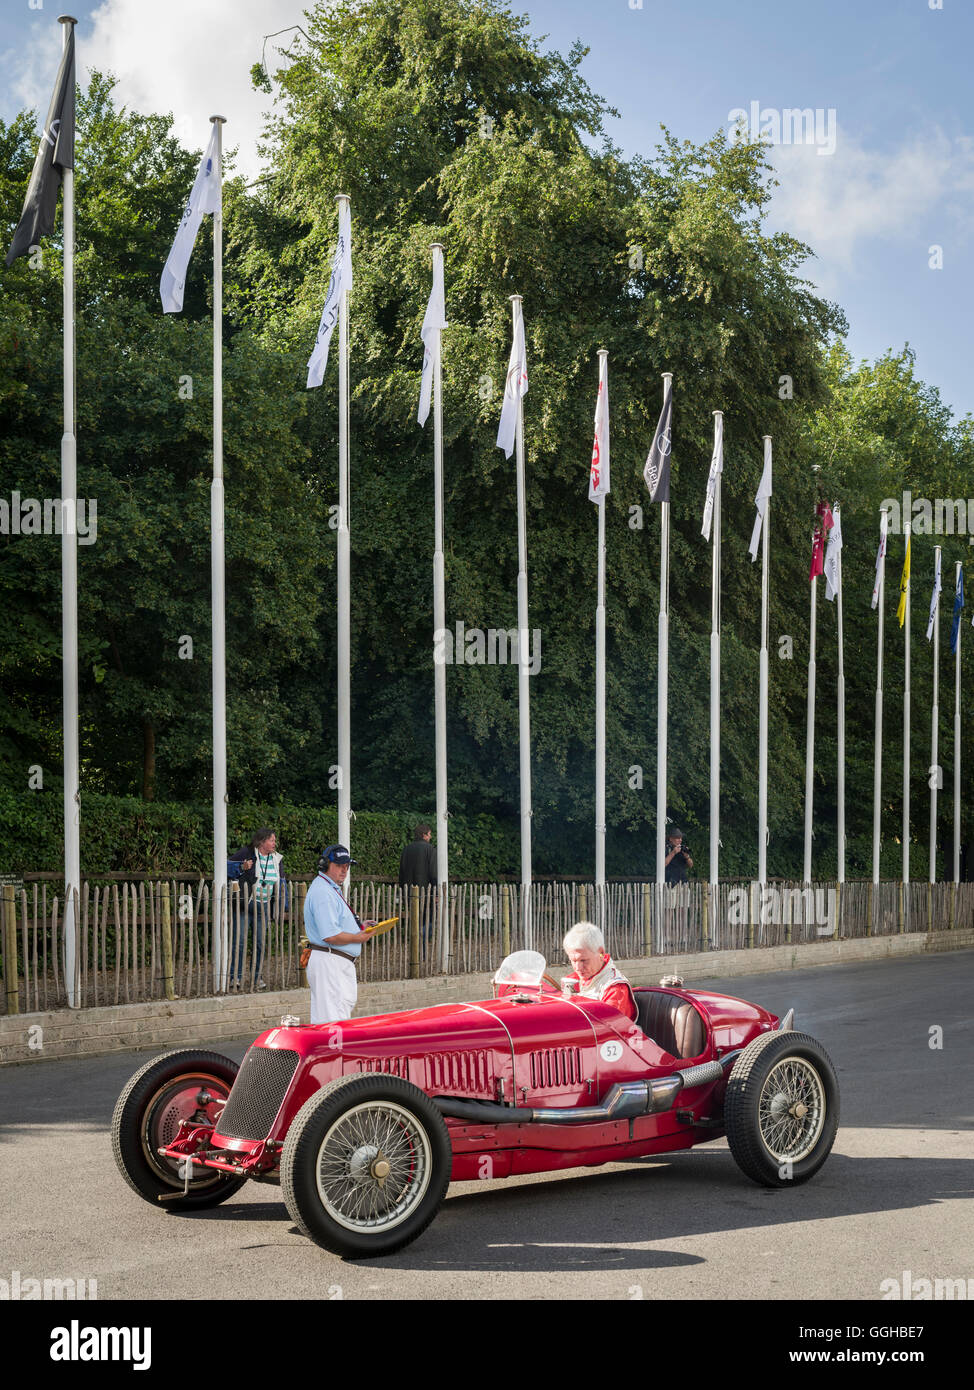 1932 Maserati 8C-3000, Goodwood Festival of Speed 2014, course, voiture course, voiture classique, Chichester, Sussex, Royaume-Uni, Gre Banque D'Images